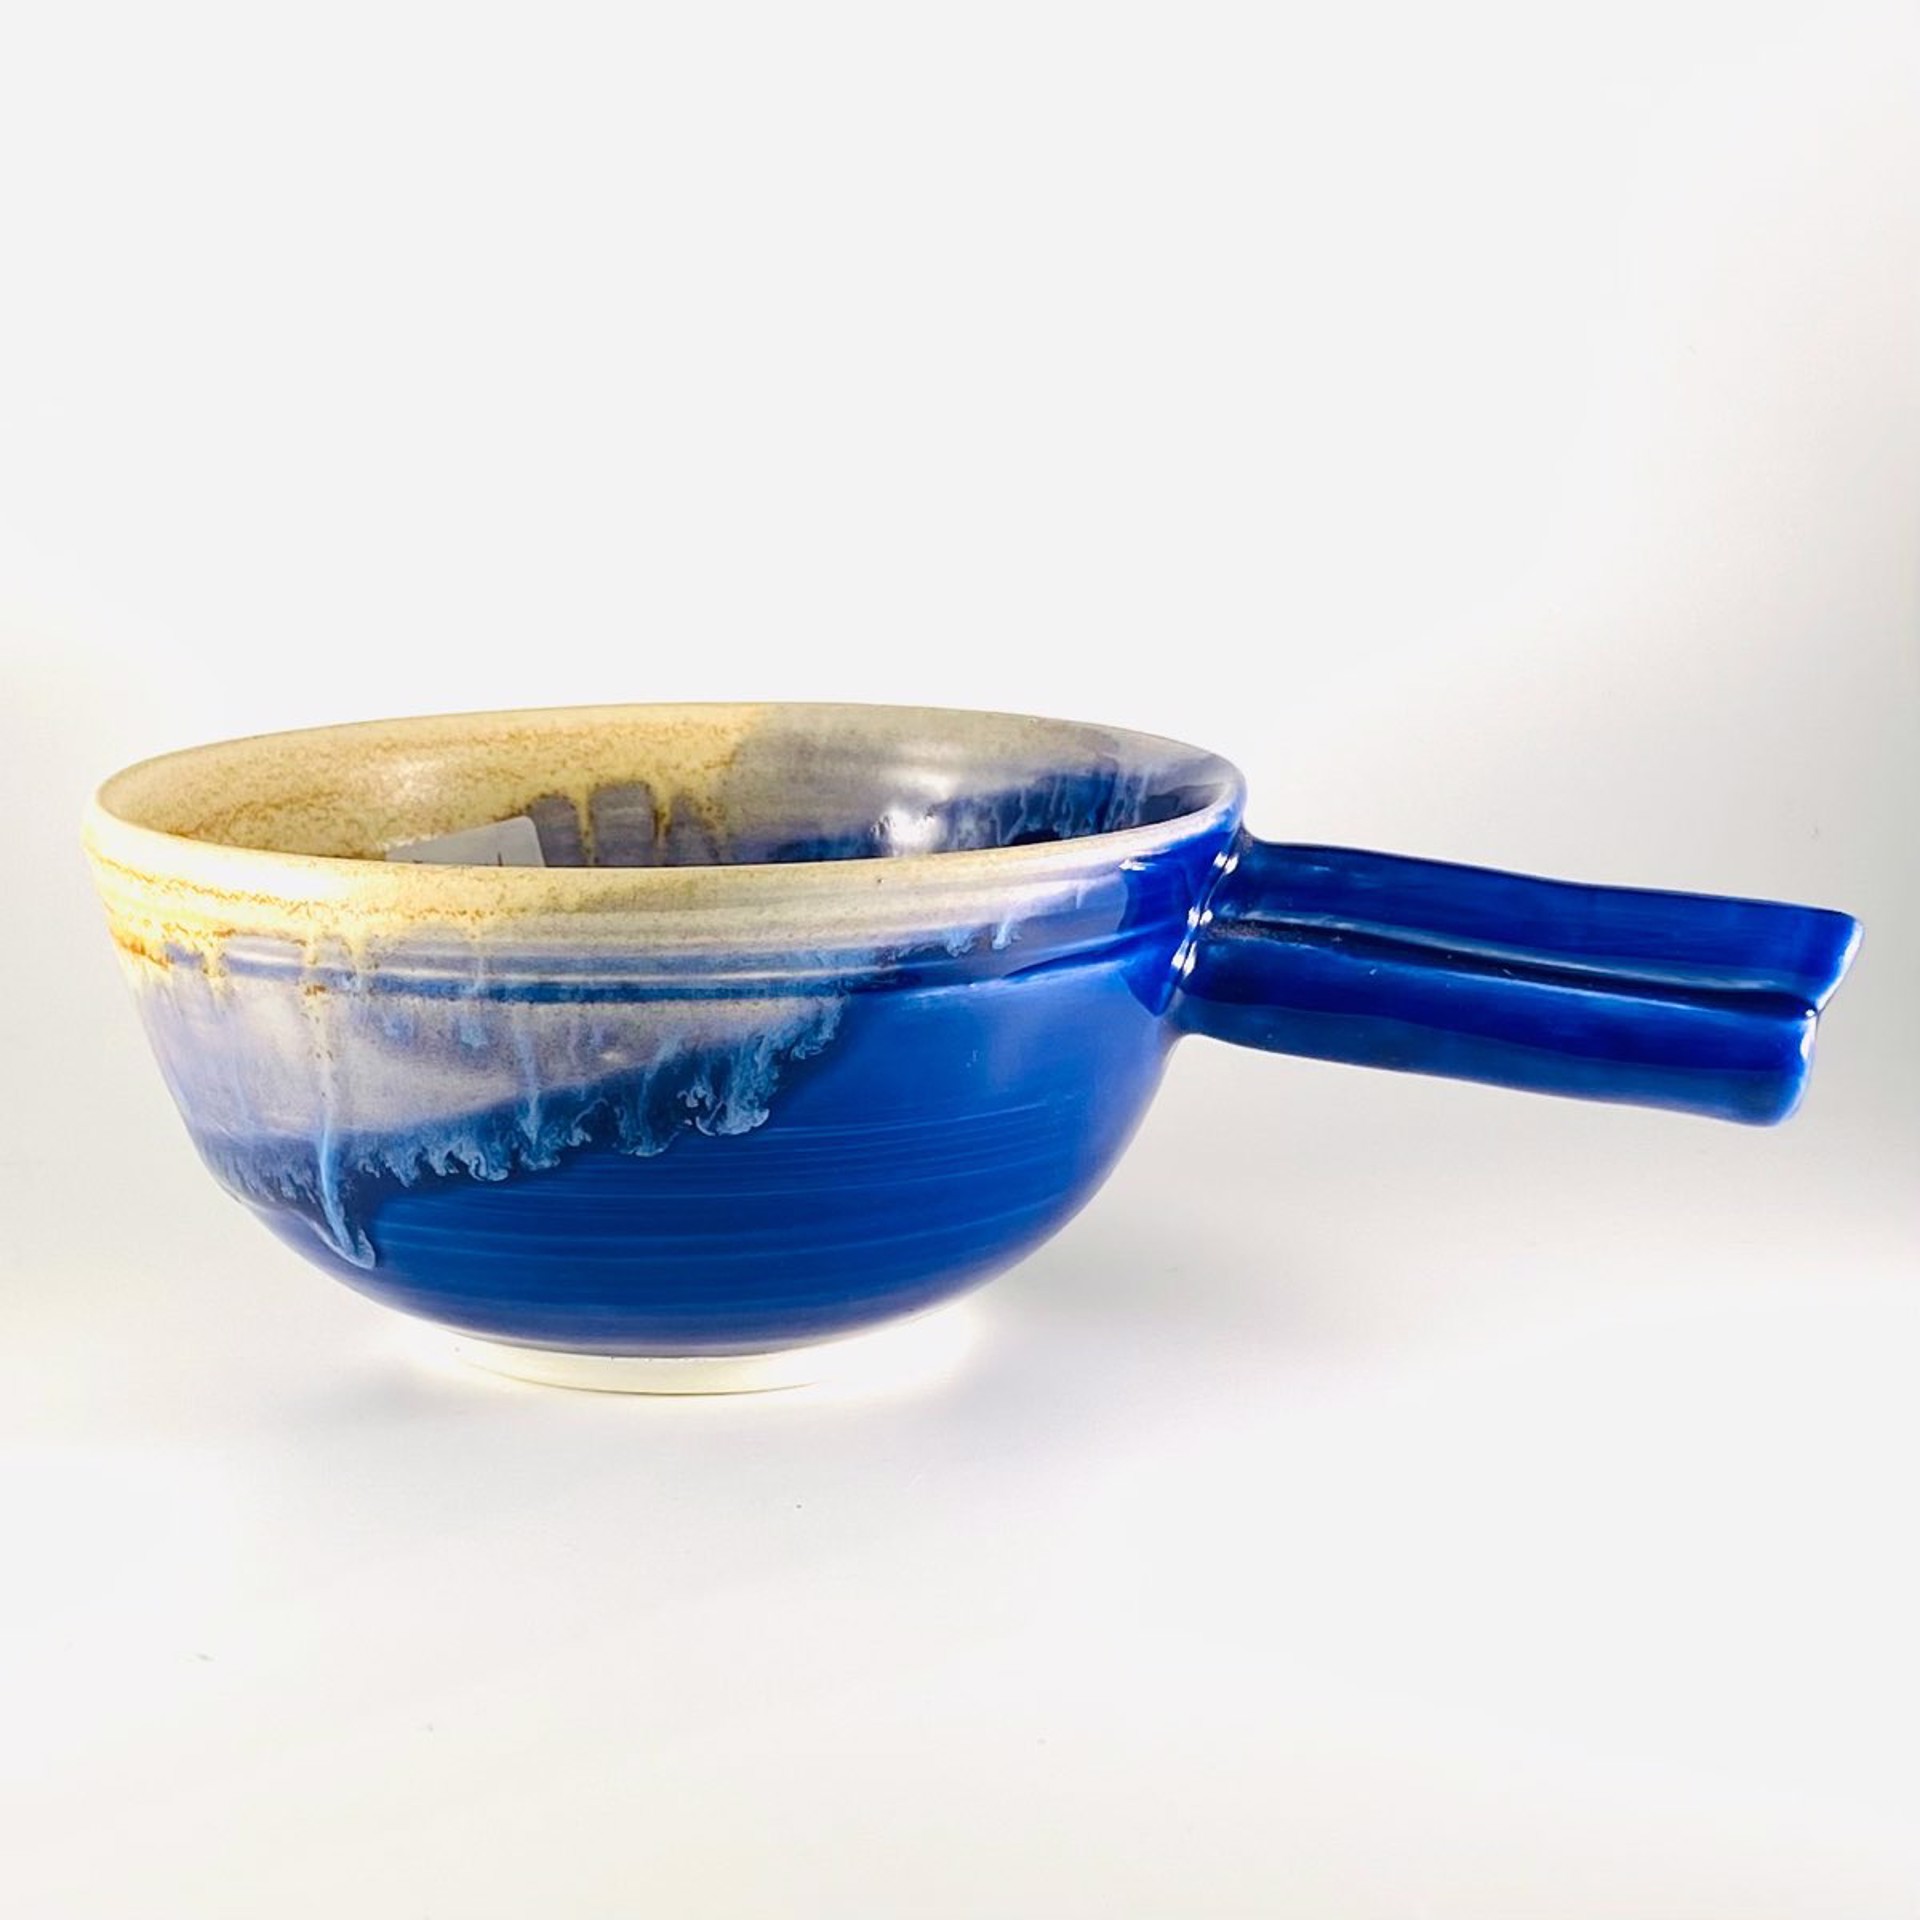 ILO22-10 Cobalt Soup Bowl with Handle by Ilene Olanoff